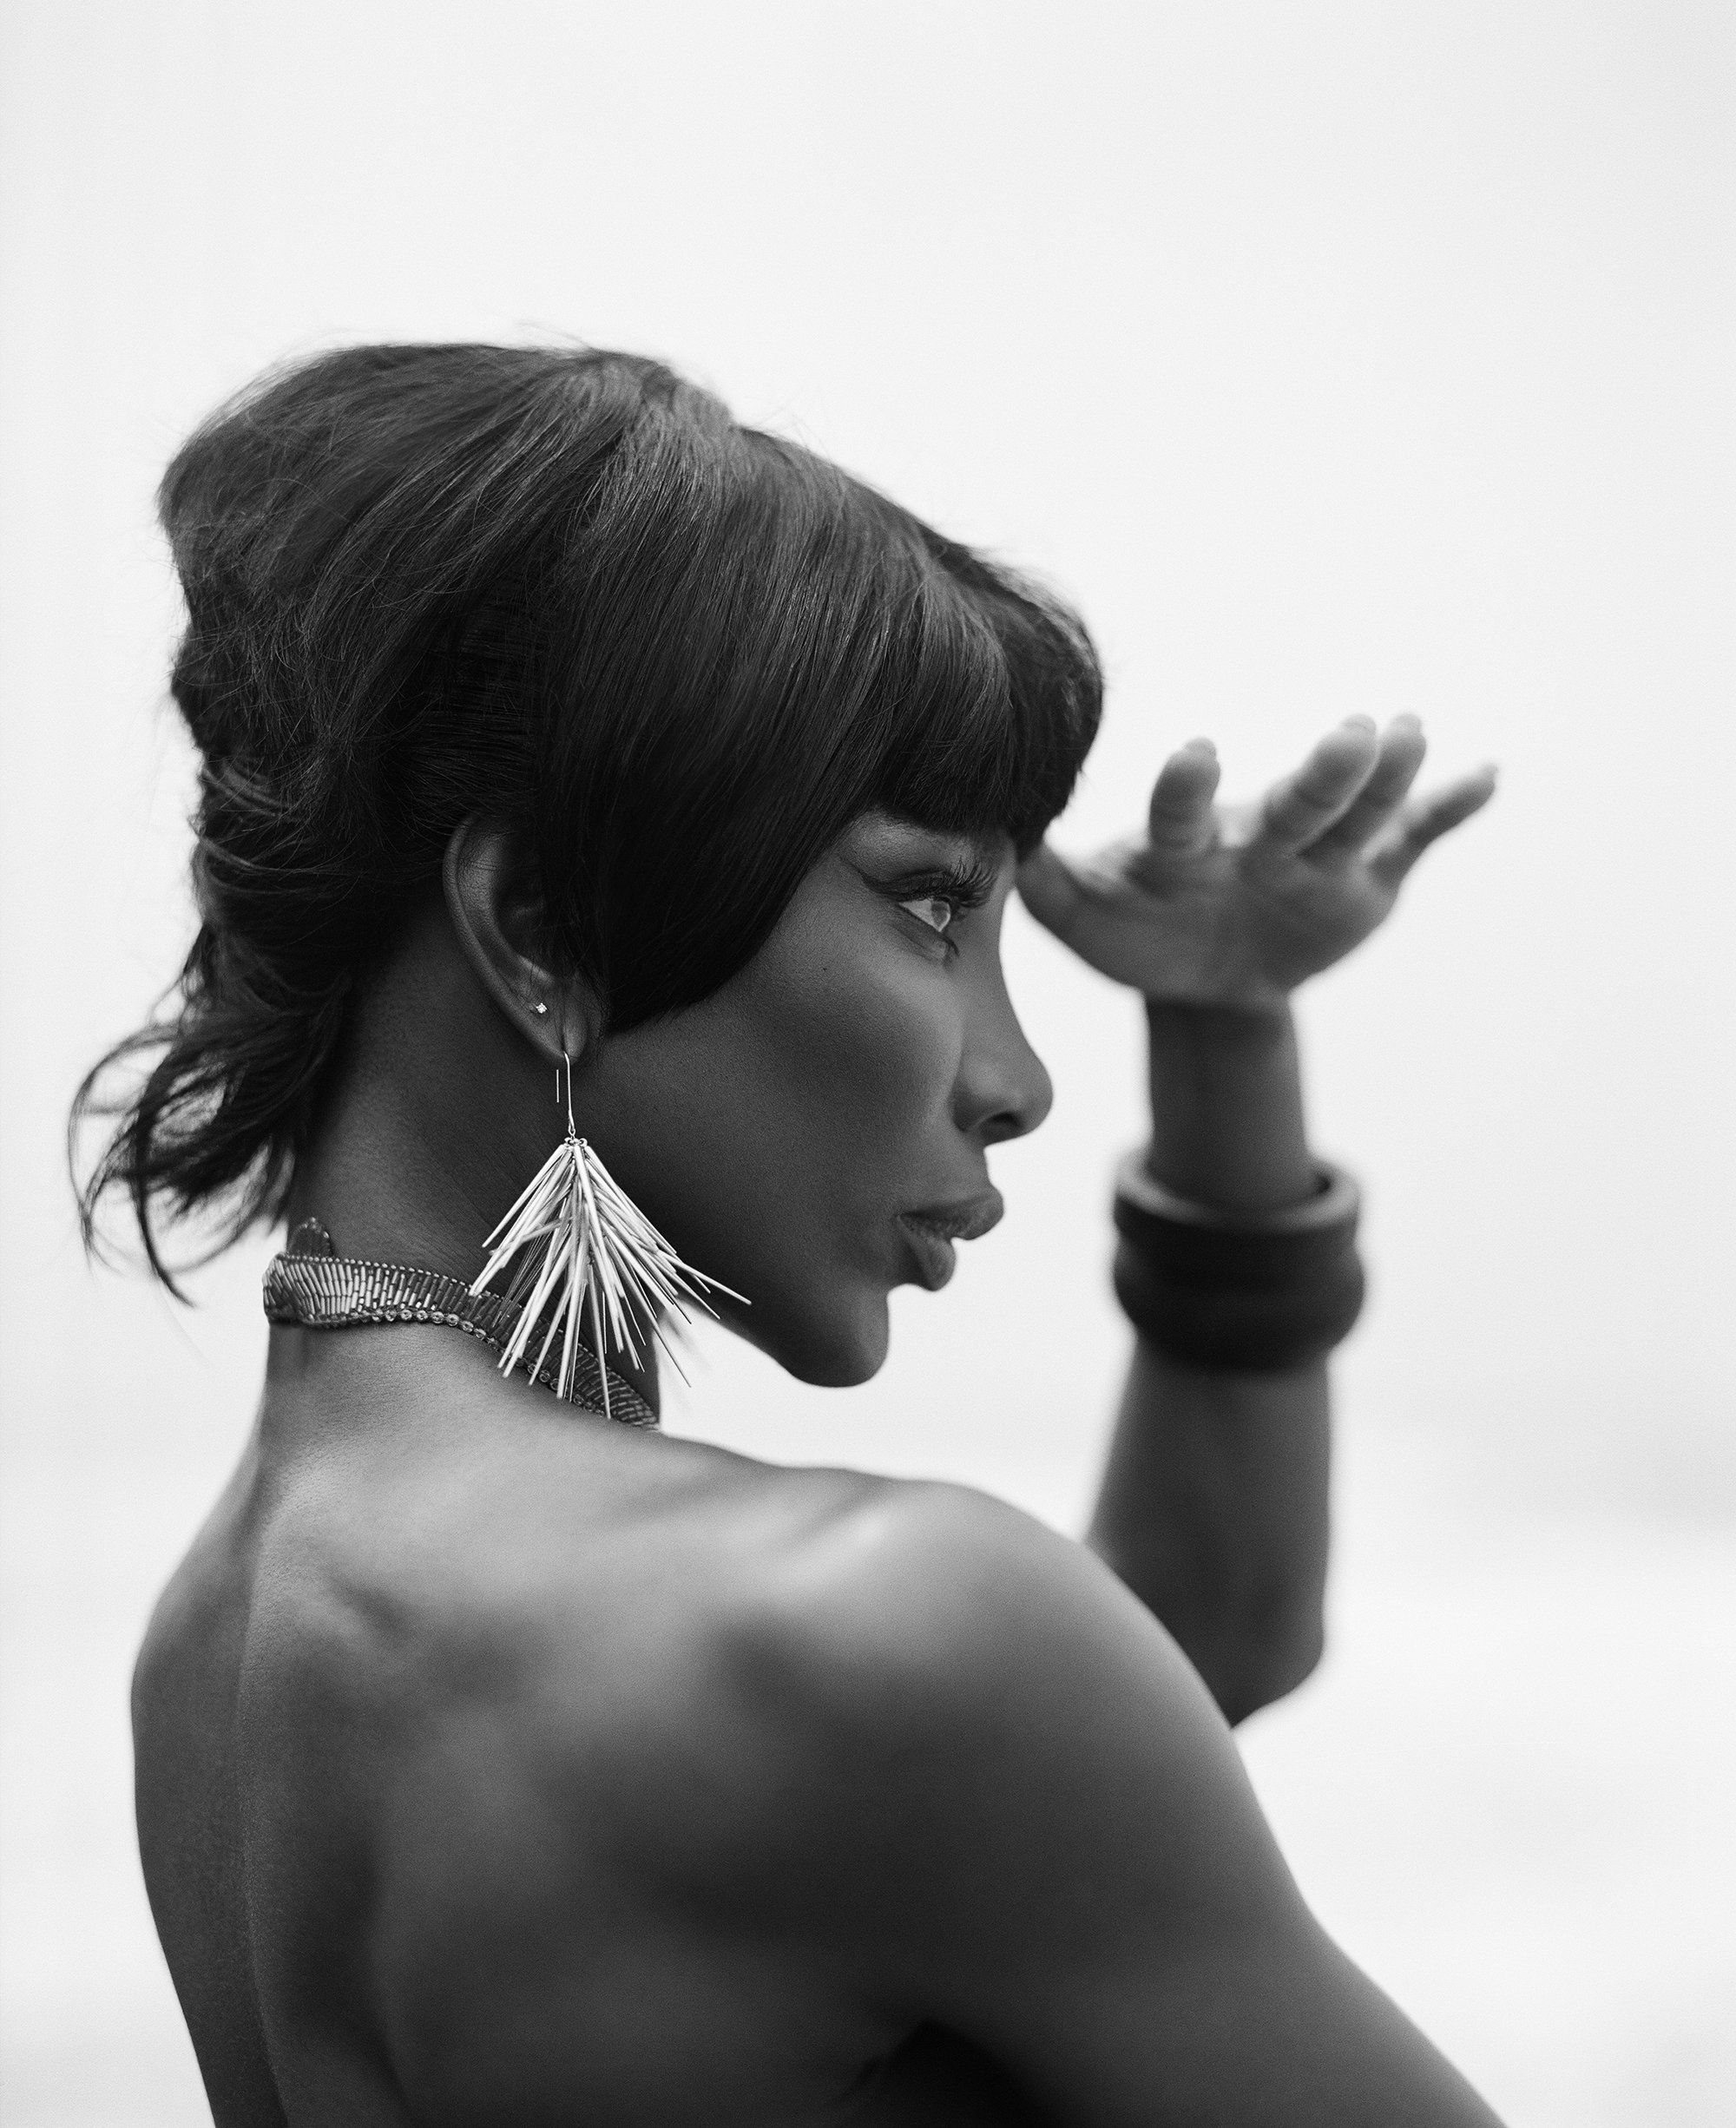 Michaela-Coel-covers-Vogue-November-Lensed-in-Ghana-by-Malick-Bodian-5.jpeg